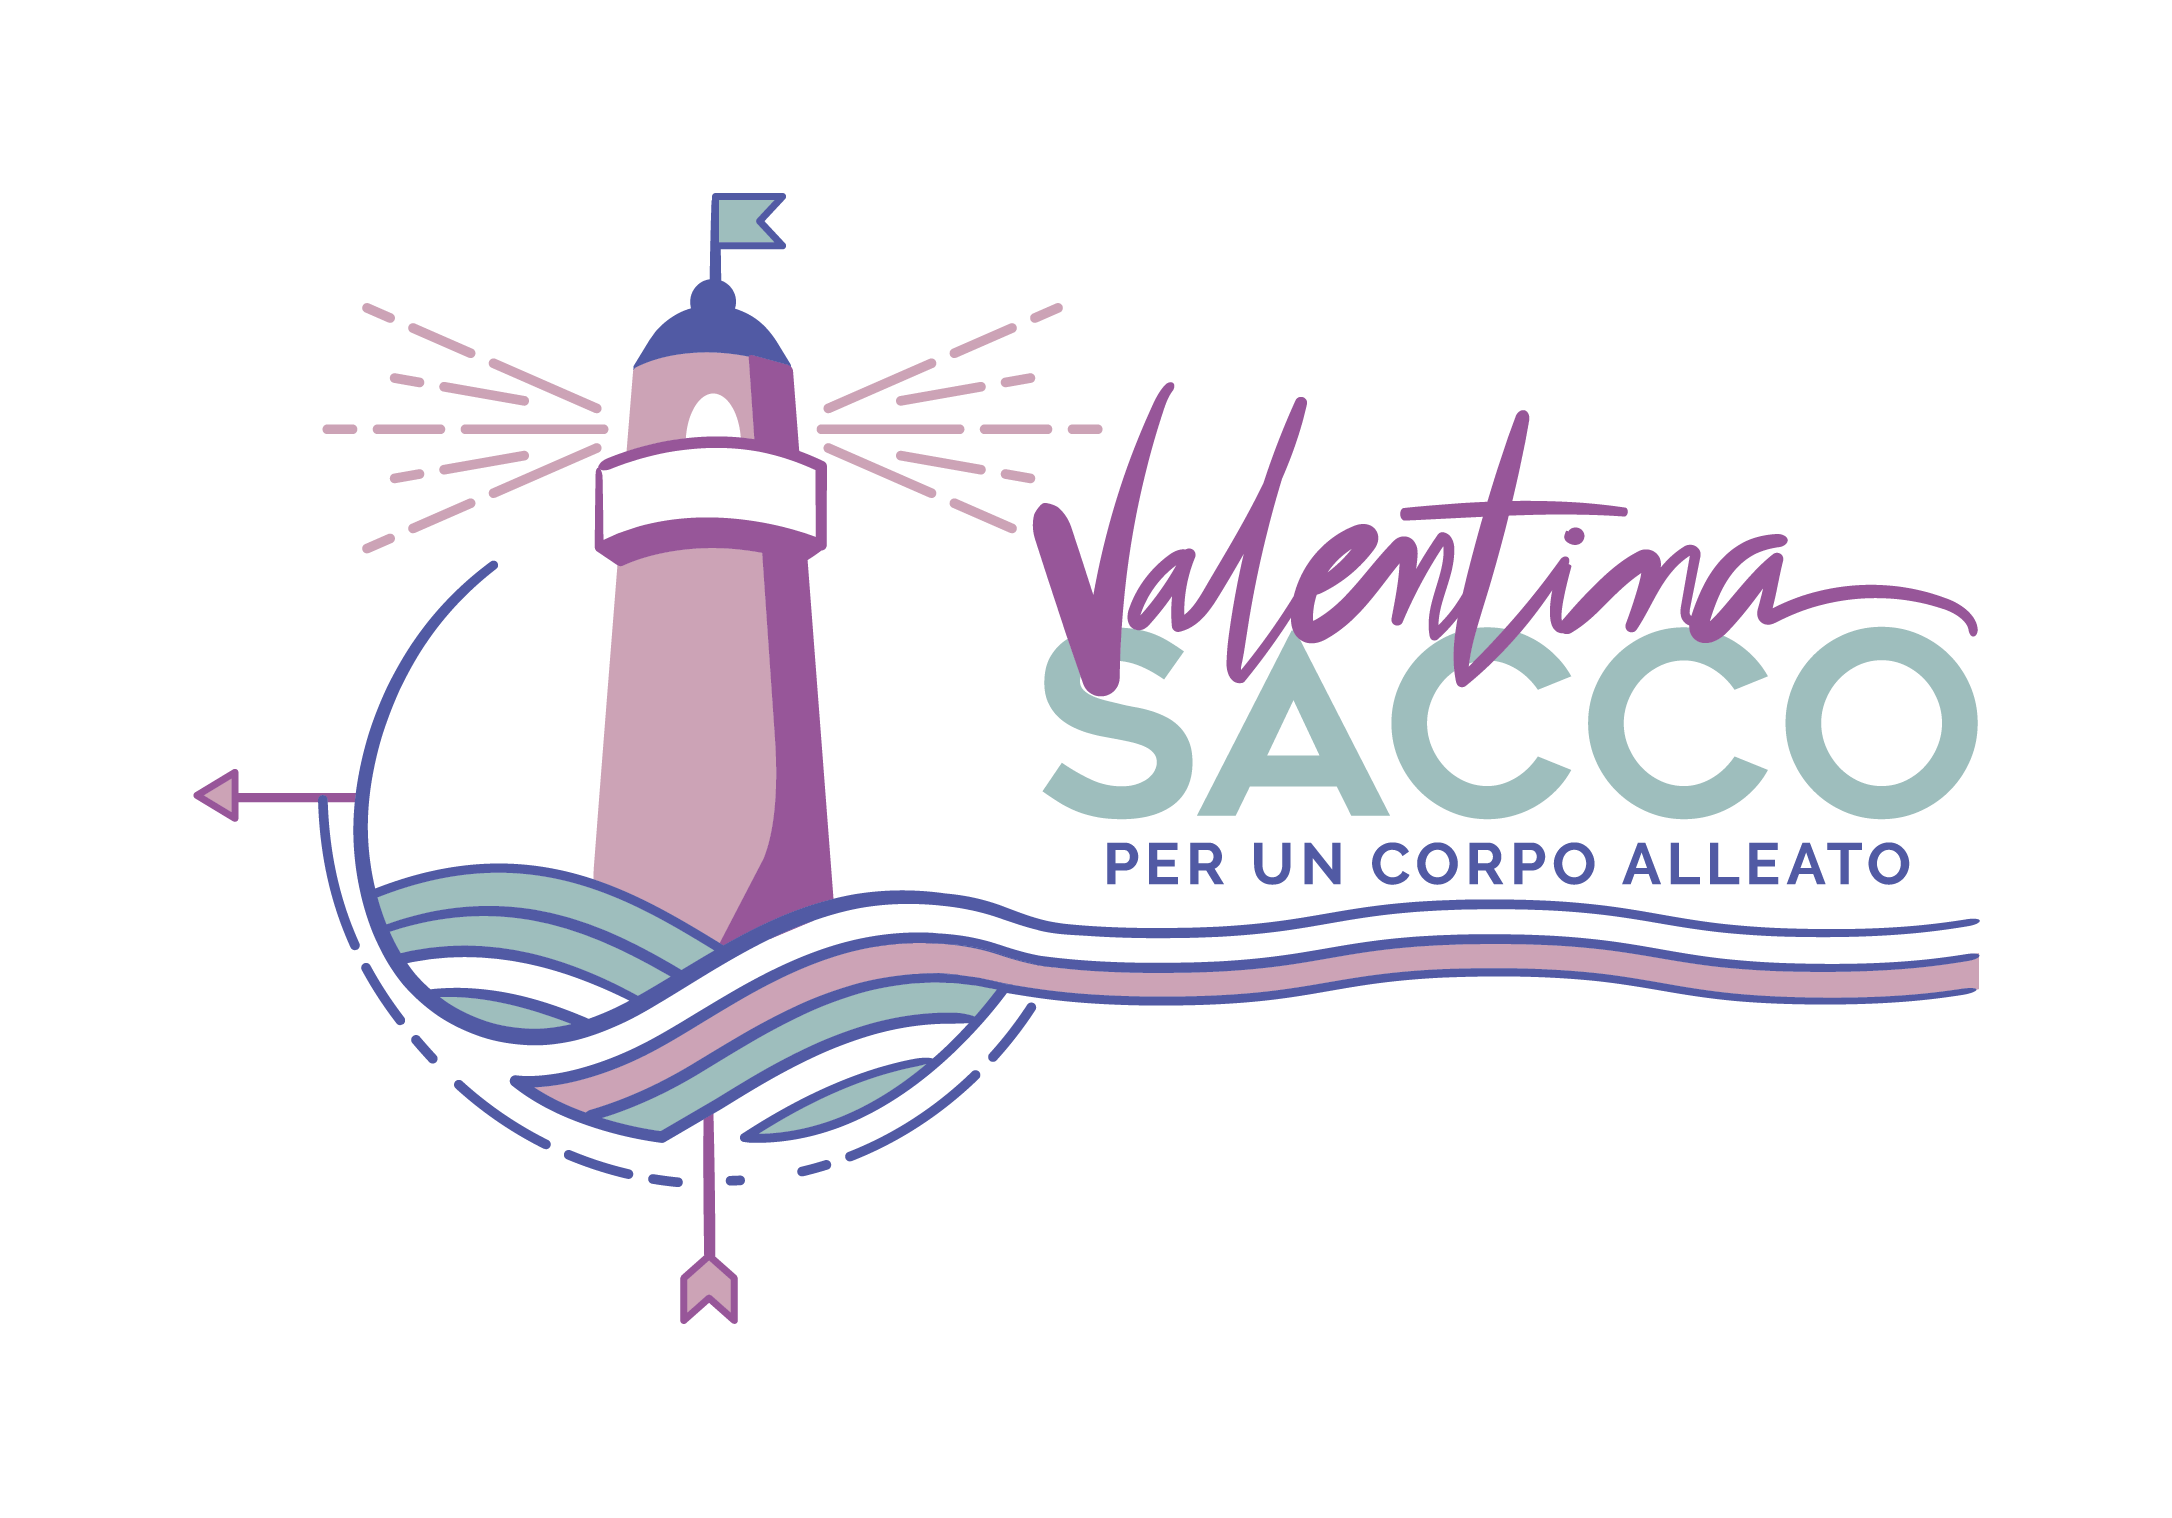 Valentina Sacco logo